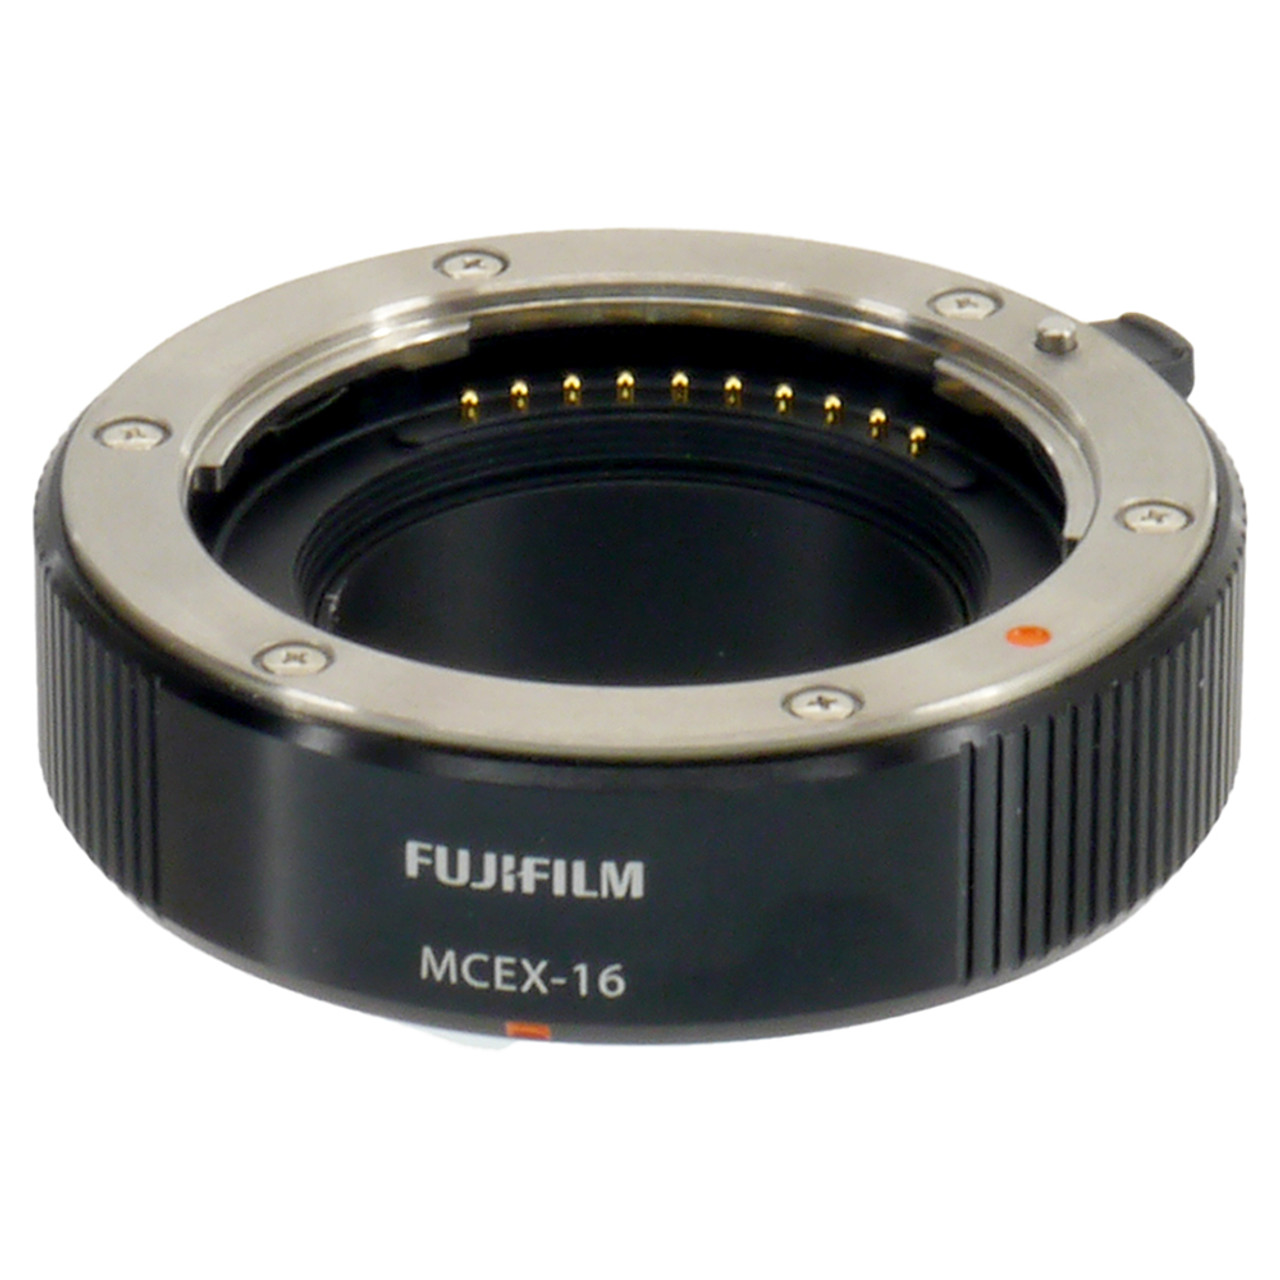 USED FUJI MCEX - 16 AF EXTENSION TUBE